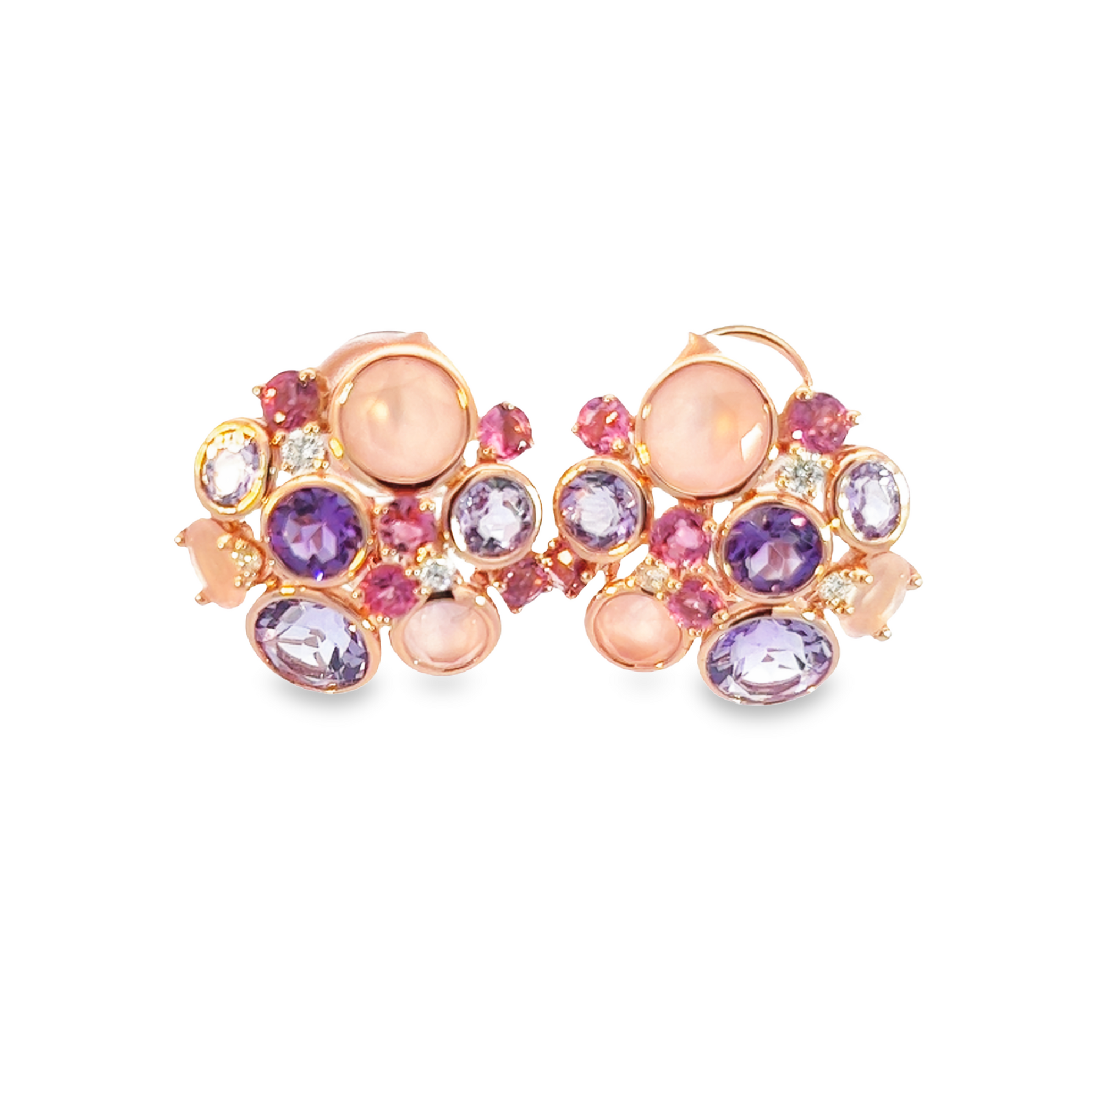 18kt Rose Gold Multi Colour gems and Diamond studs - Masterpiece Jewellery Opal & Gems Sydney Australia | Online Shop